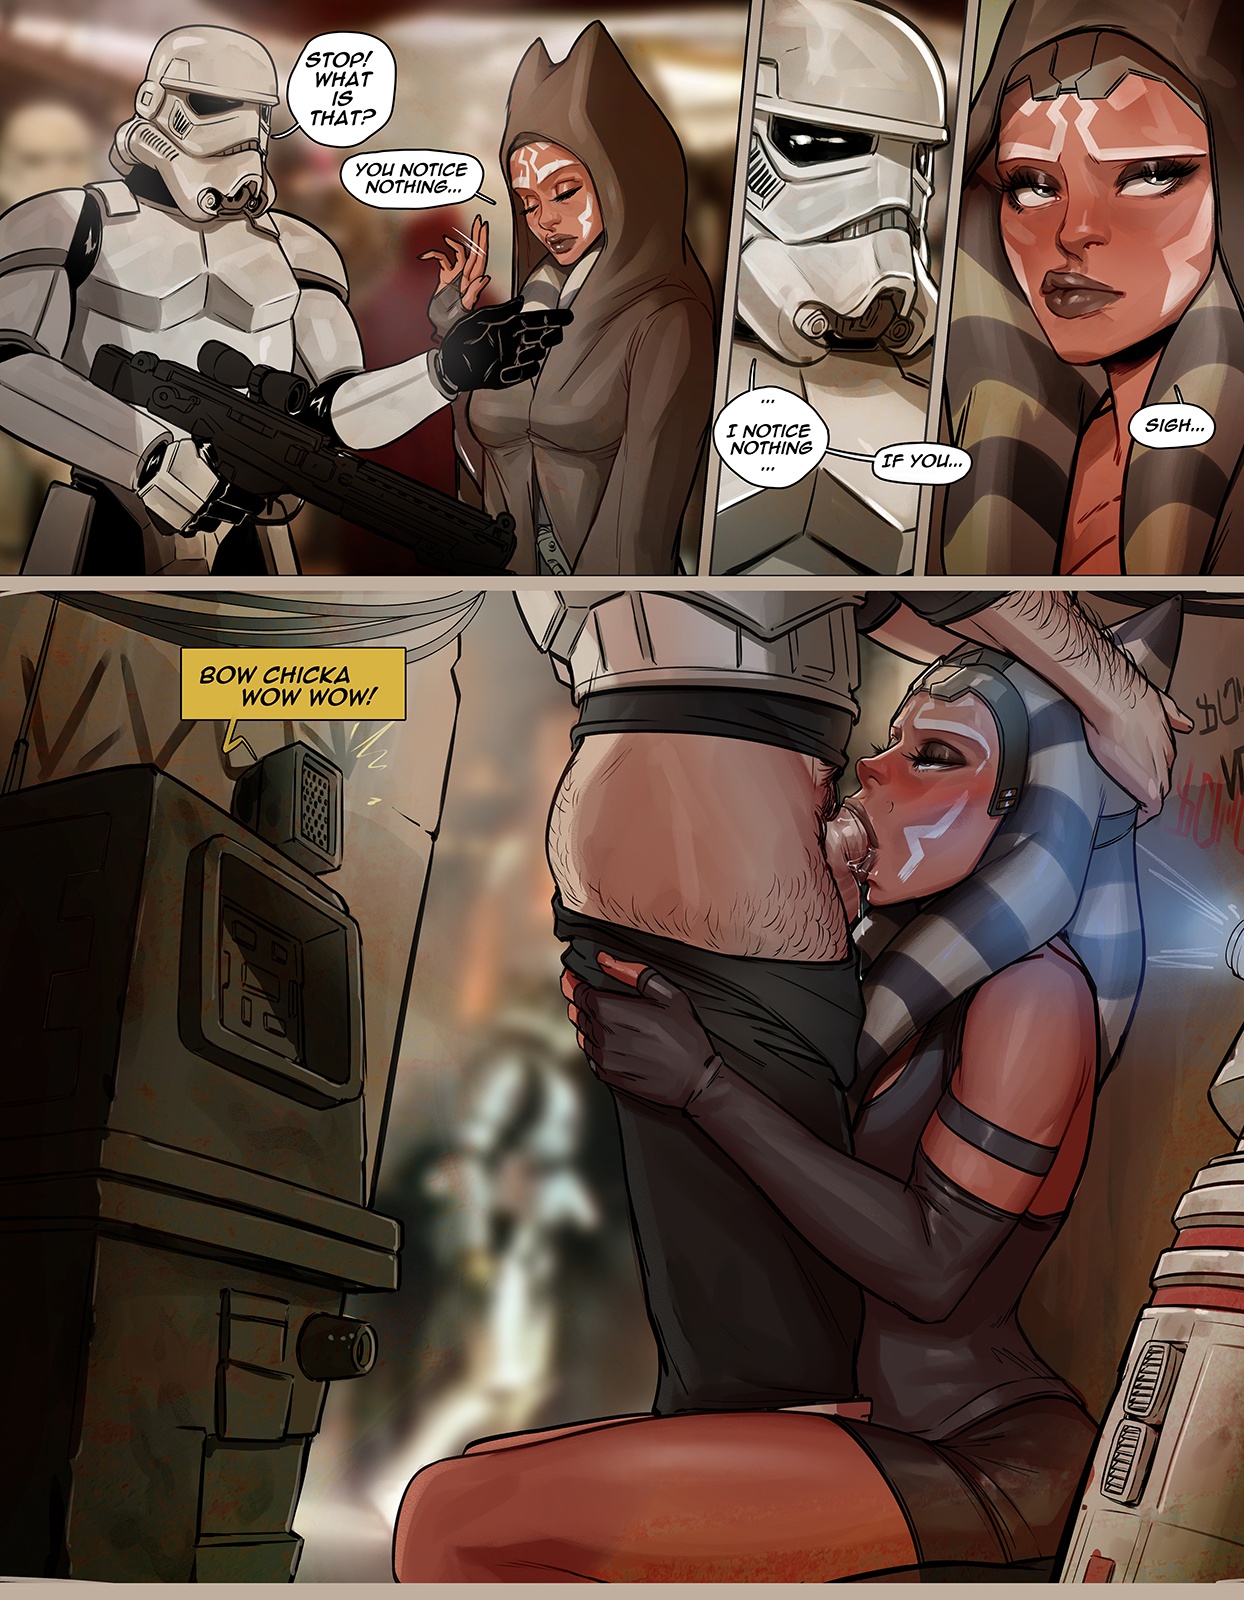 Rebels porn comic star wars Star Wars